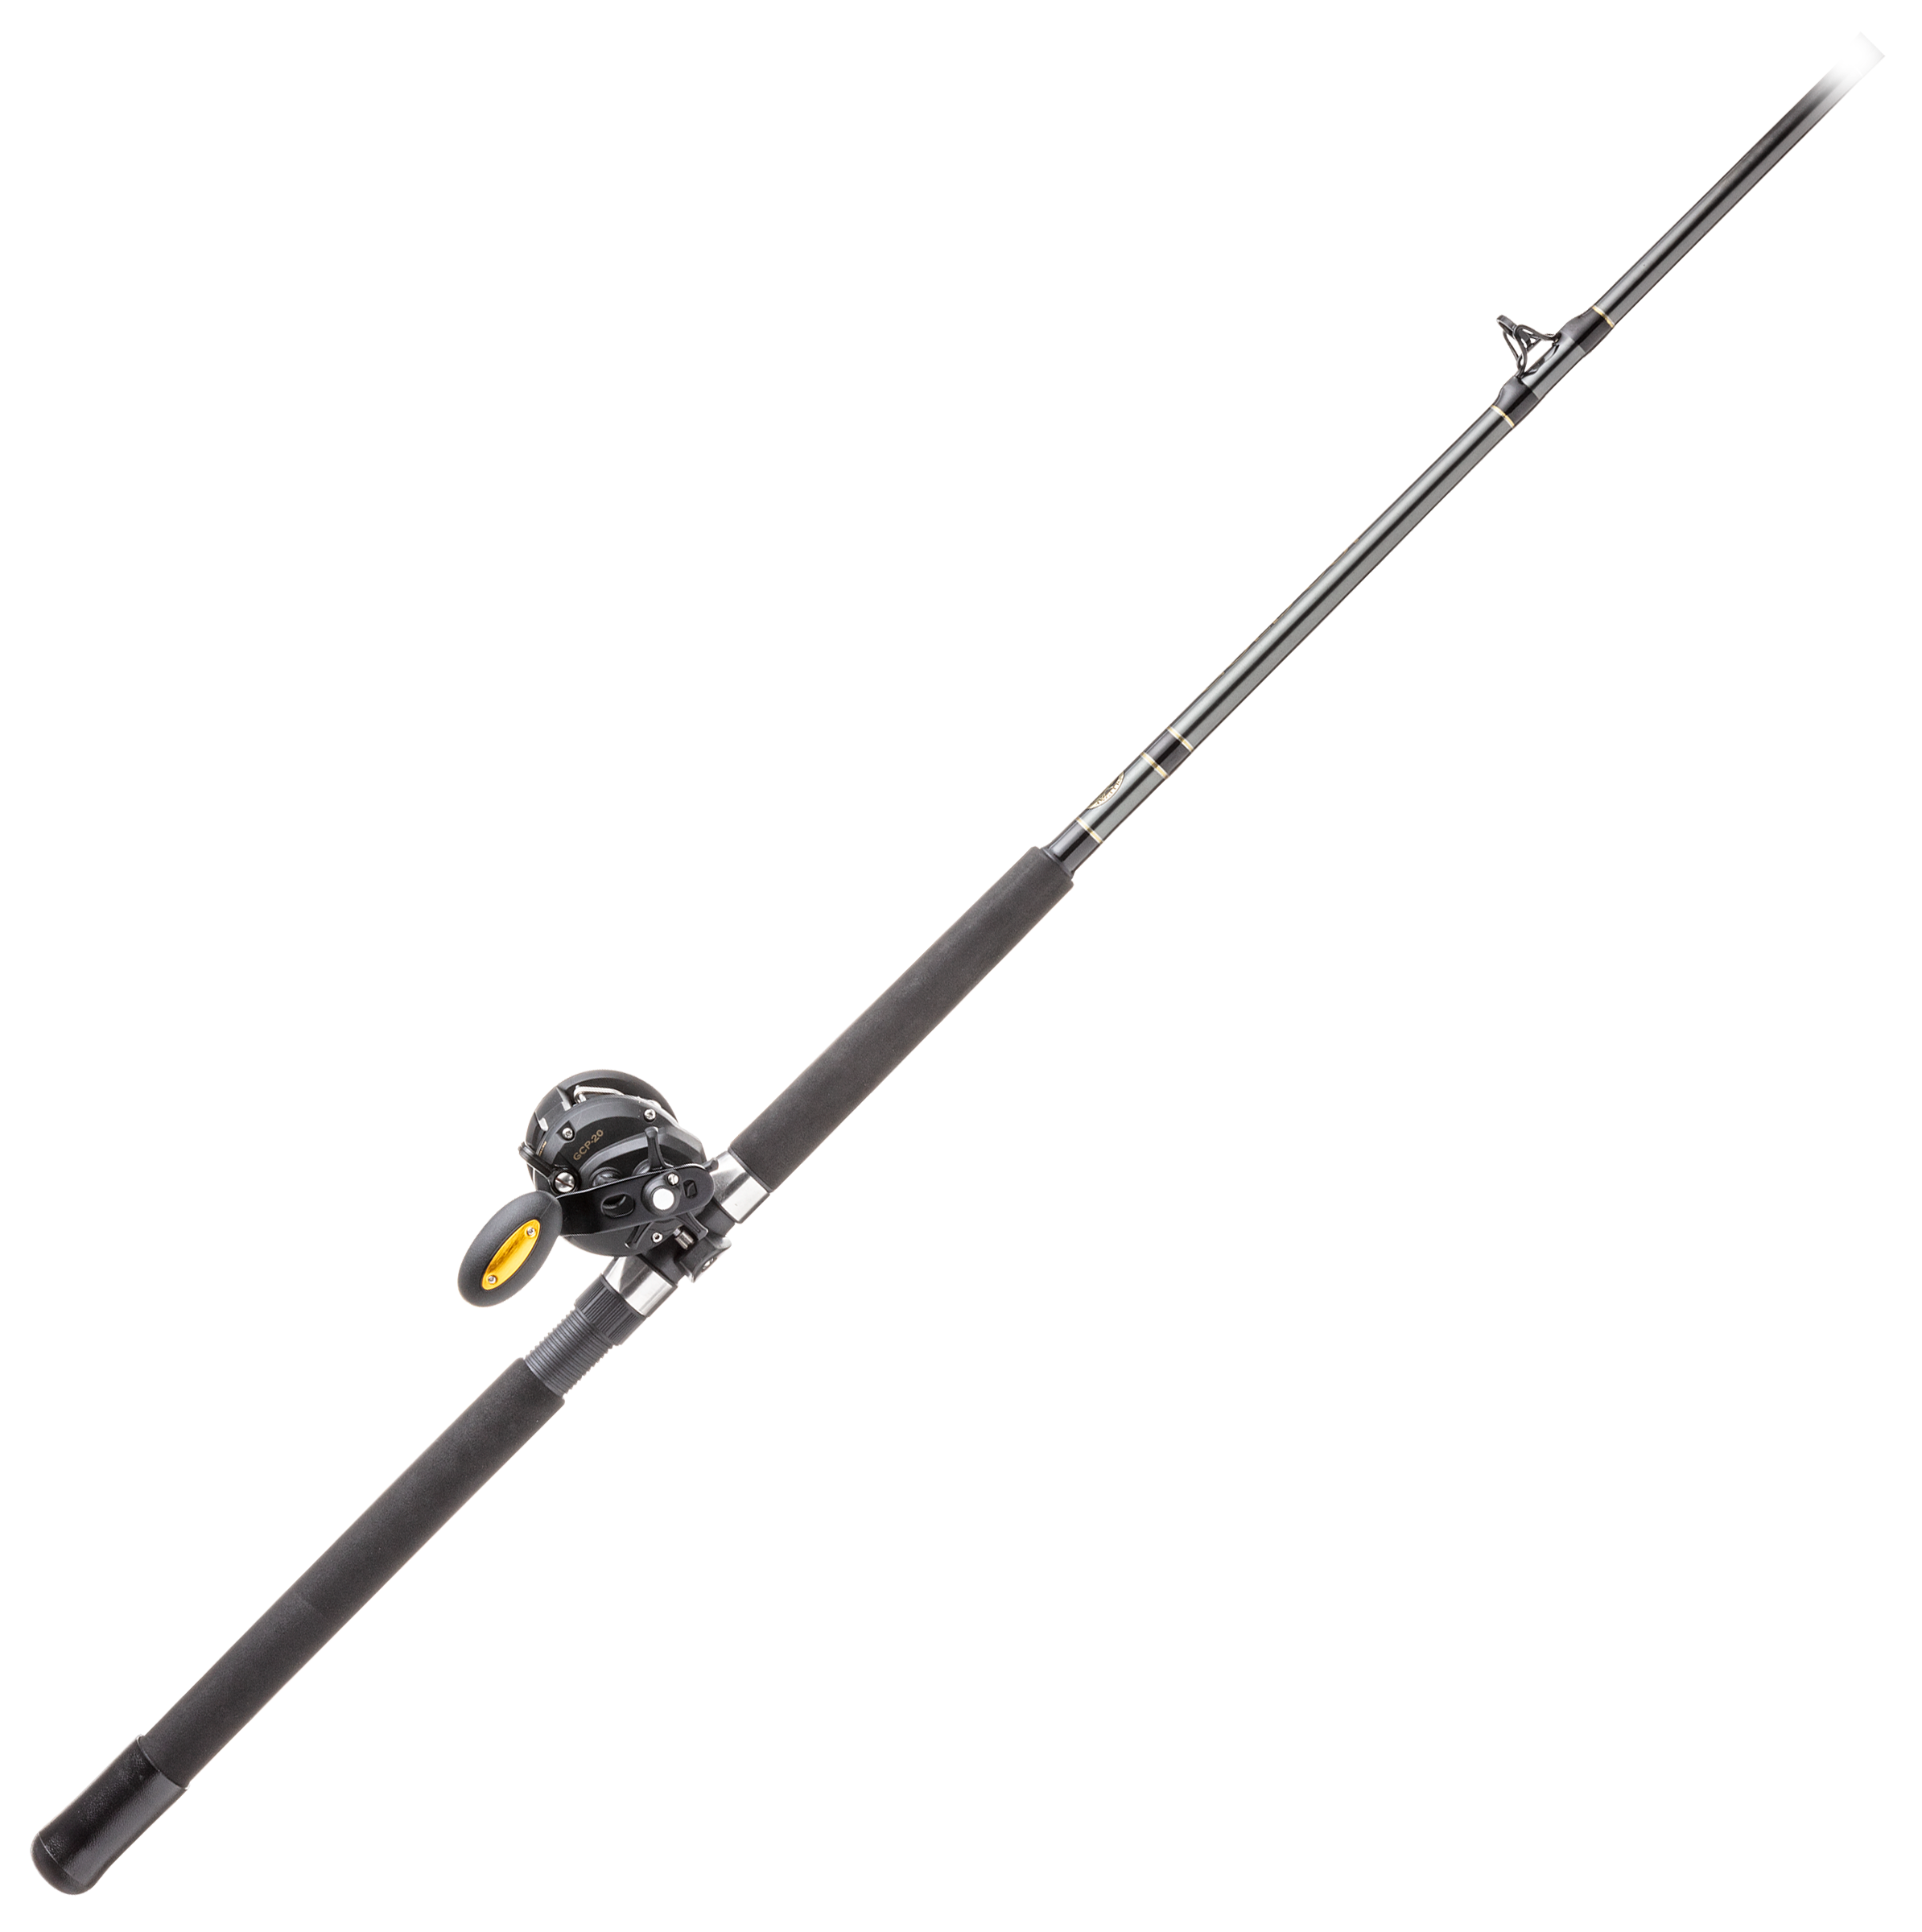 Competitor 7 Ft. Fiberglass Fishing Rod & Spinning Reel - Handy